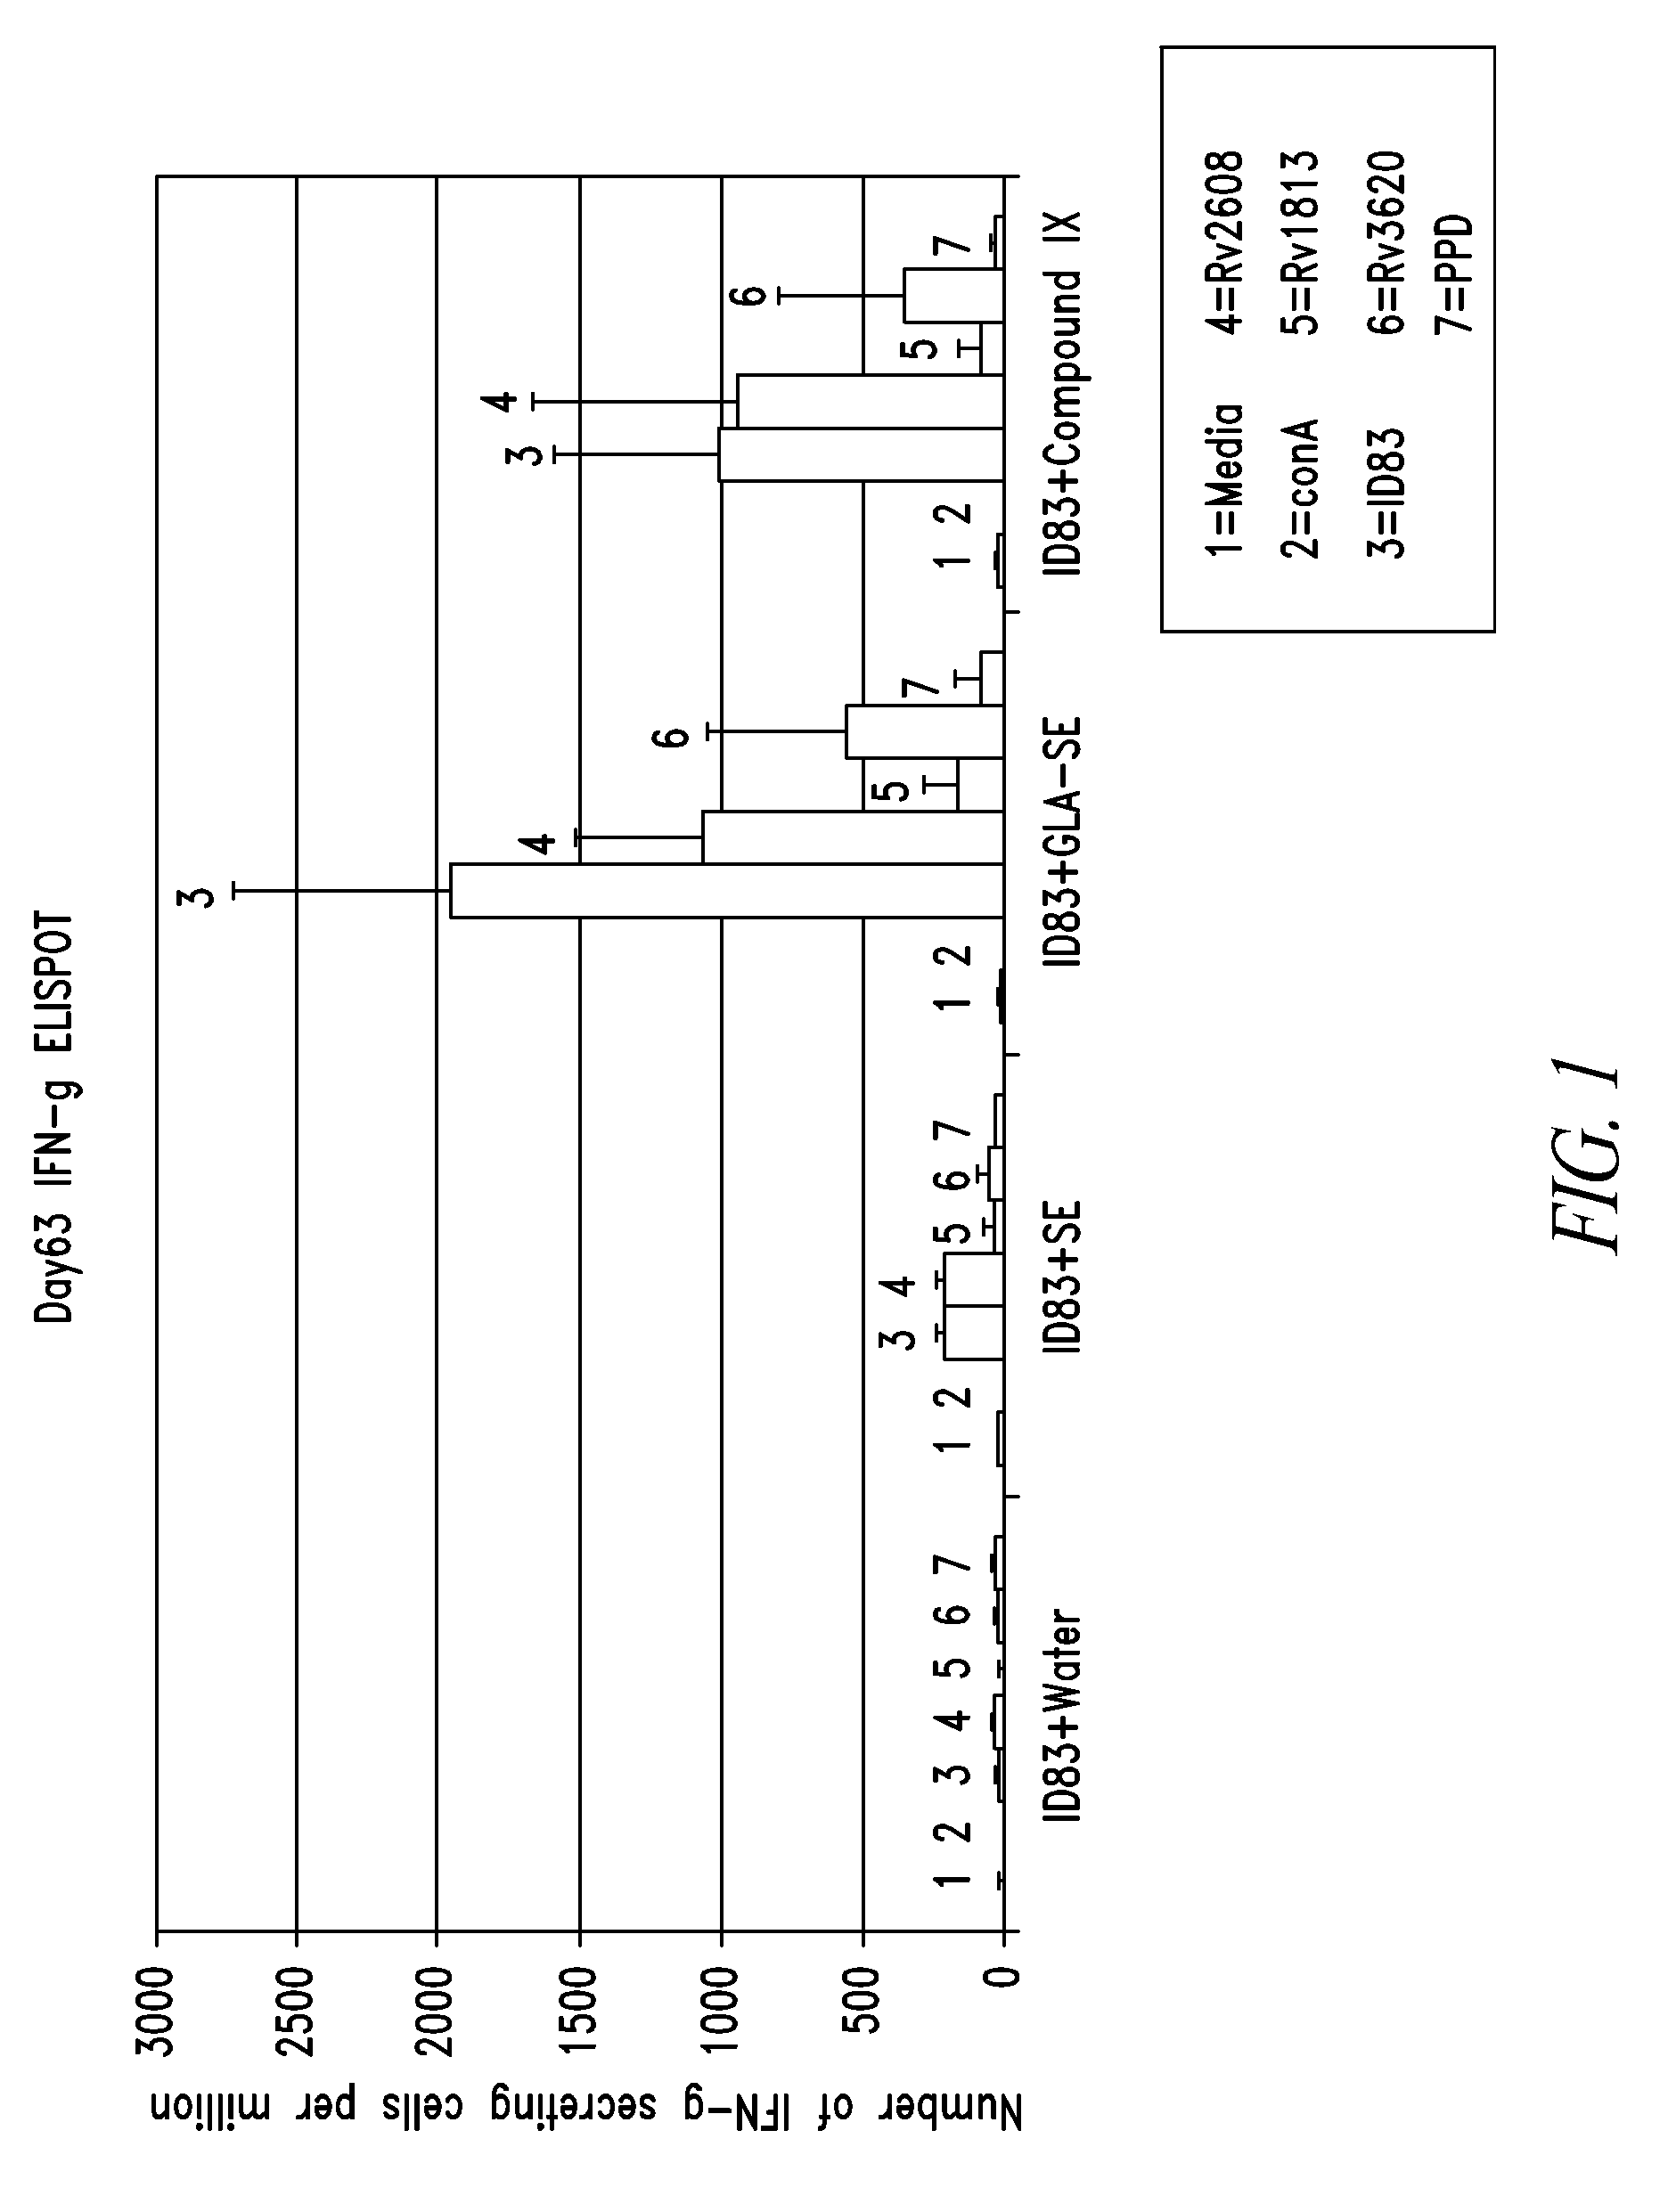 Synthetic glucopyranosyl lipid adjuvants